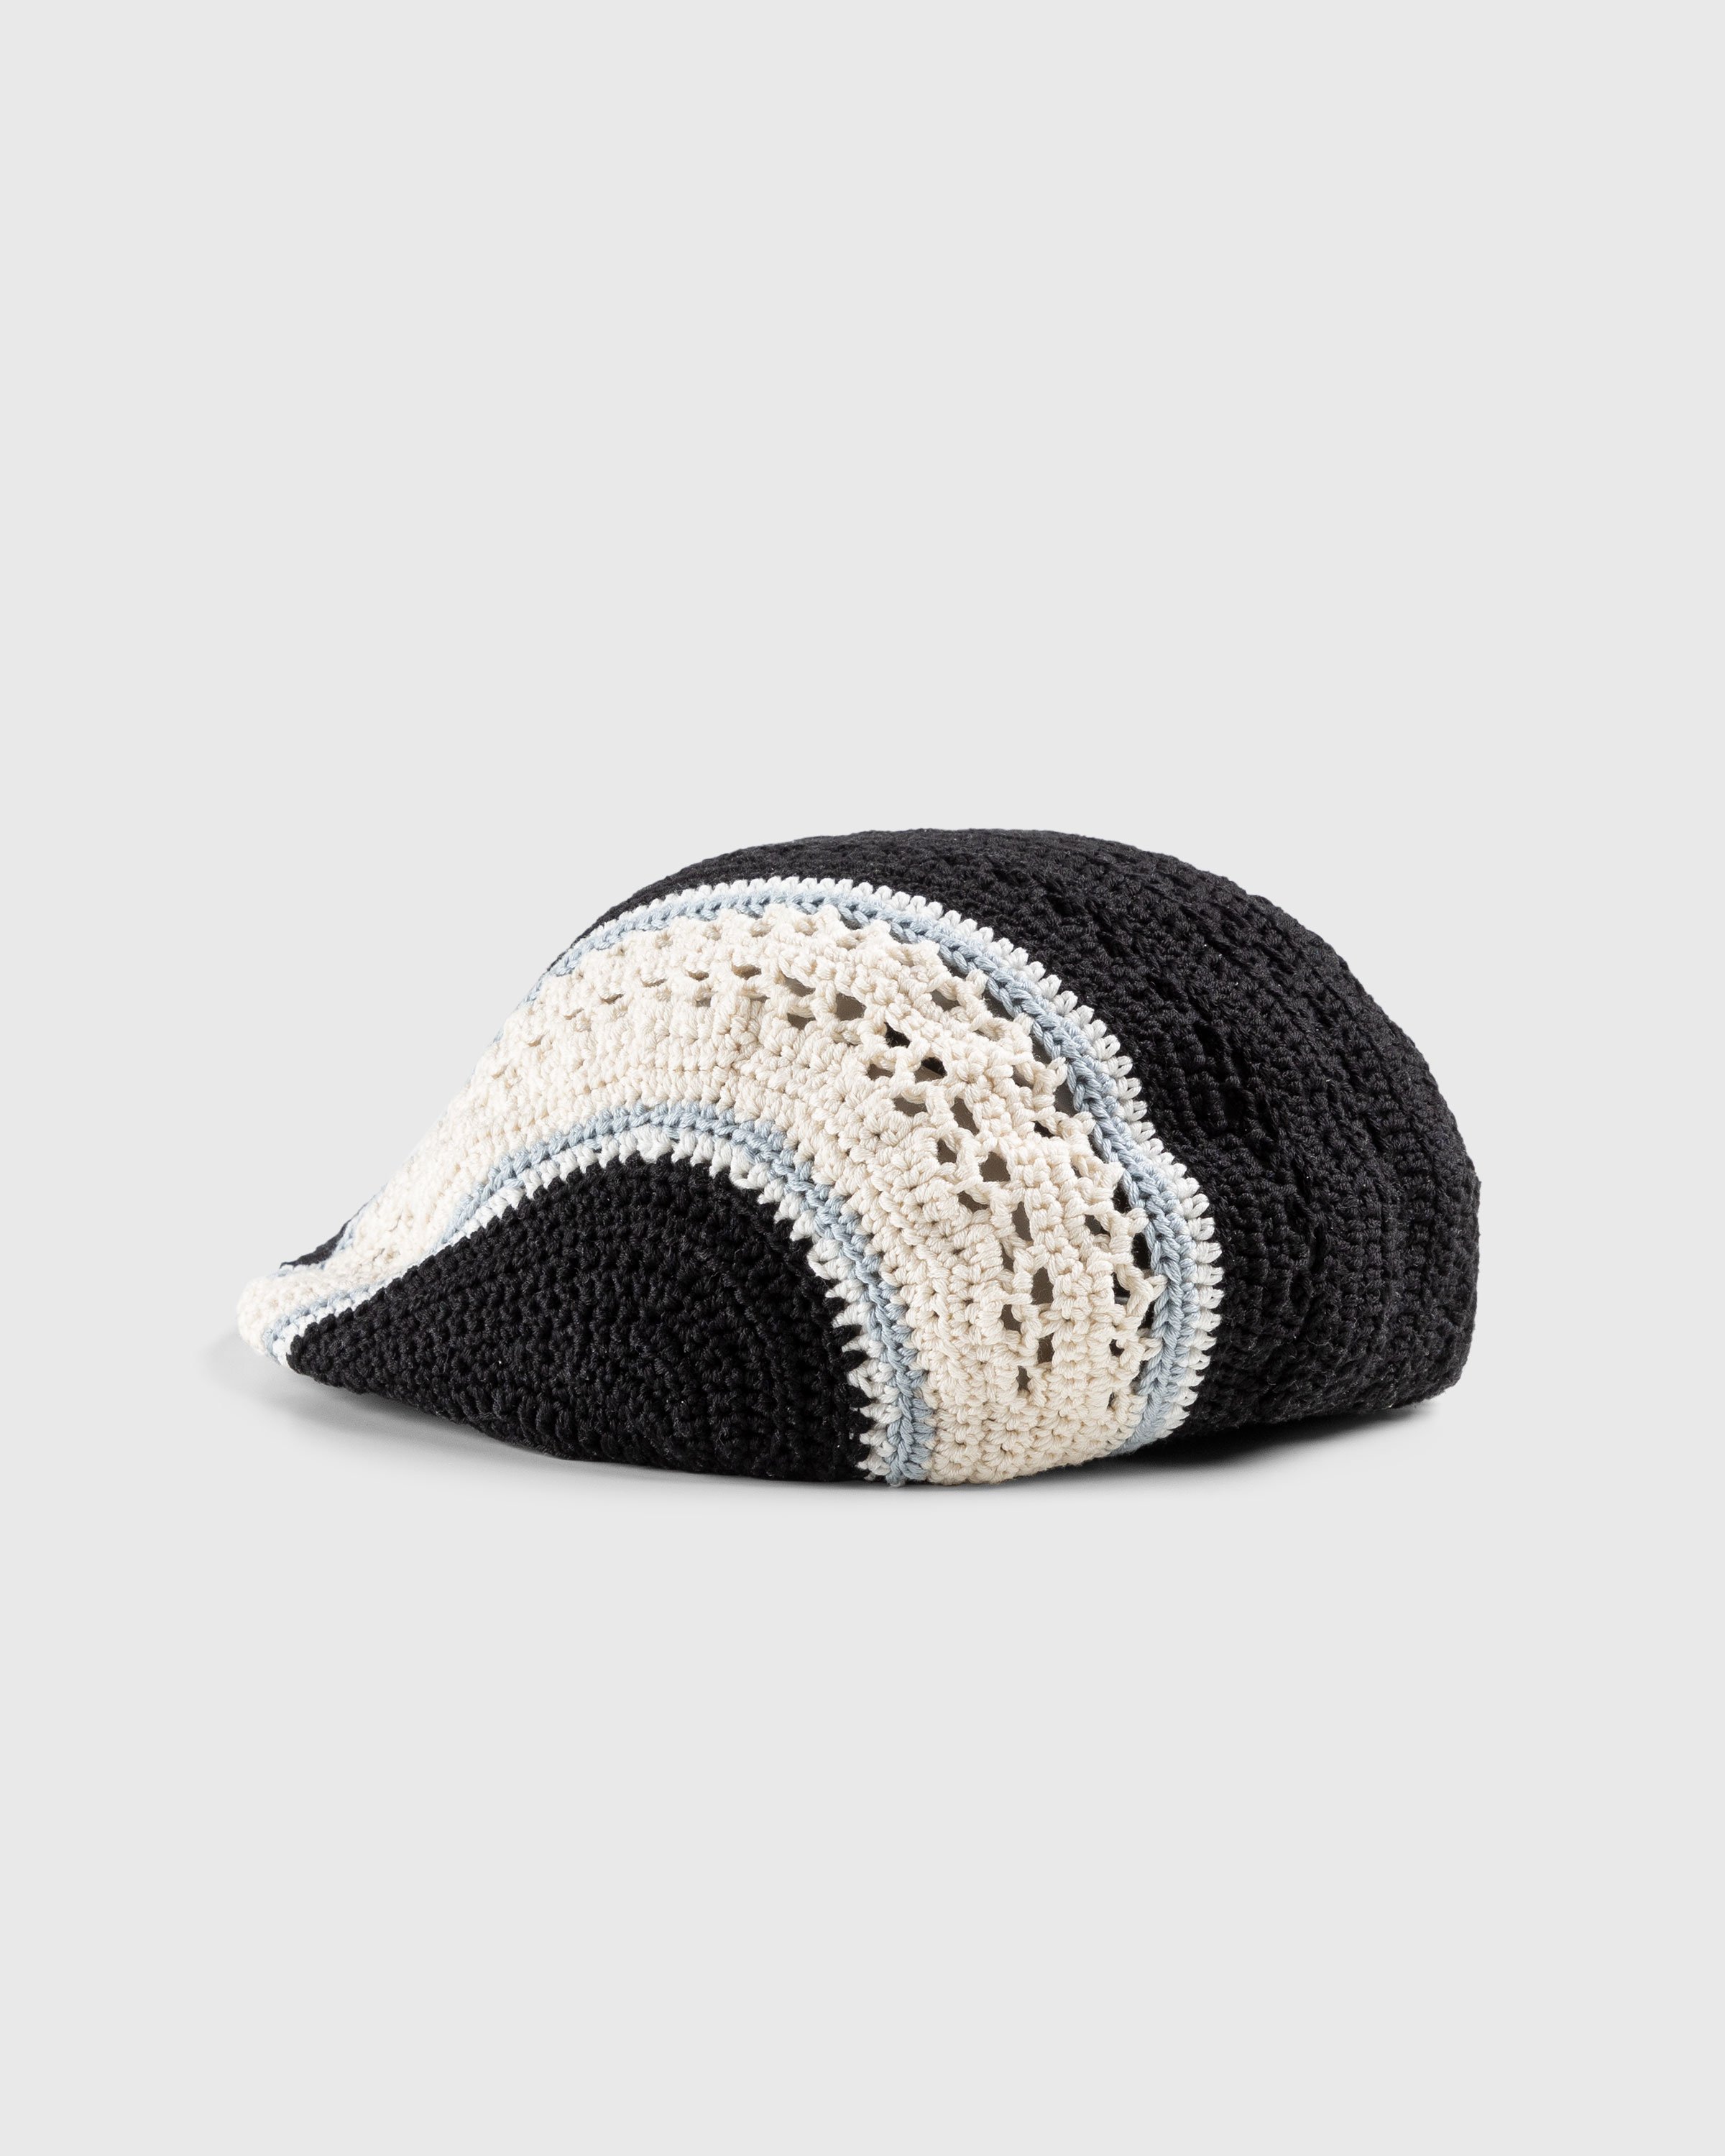 SSU - Crochet Flat Hat Black/Ivory - Accessories - Black - Image 3